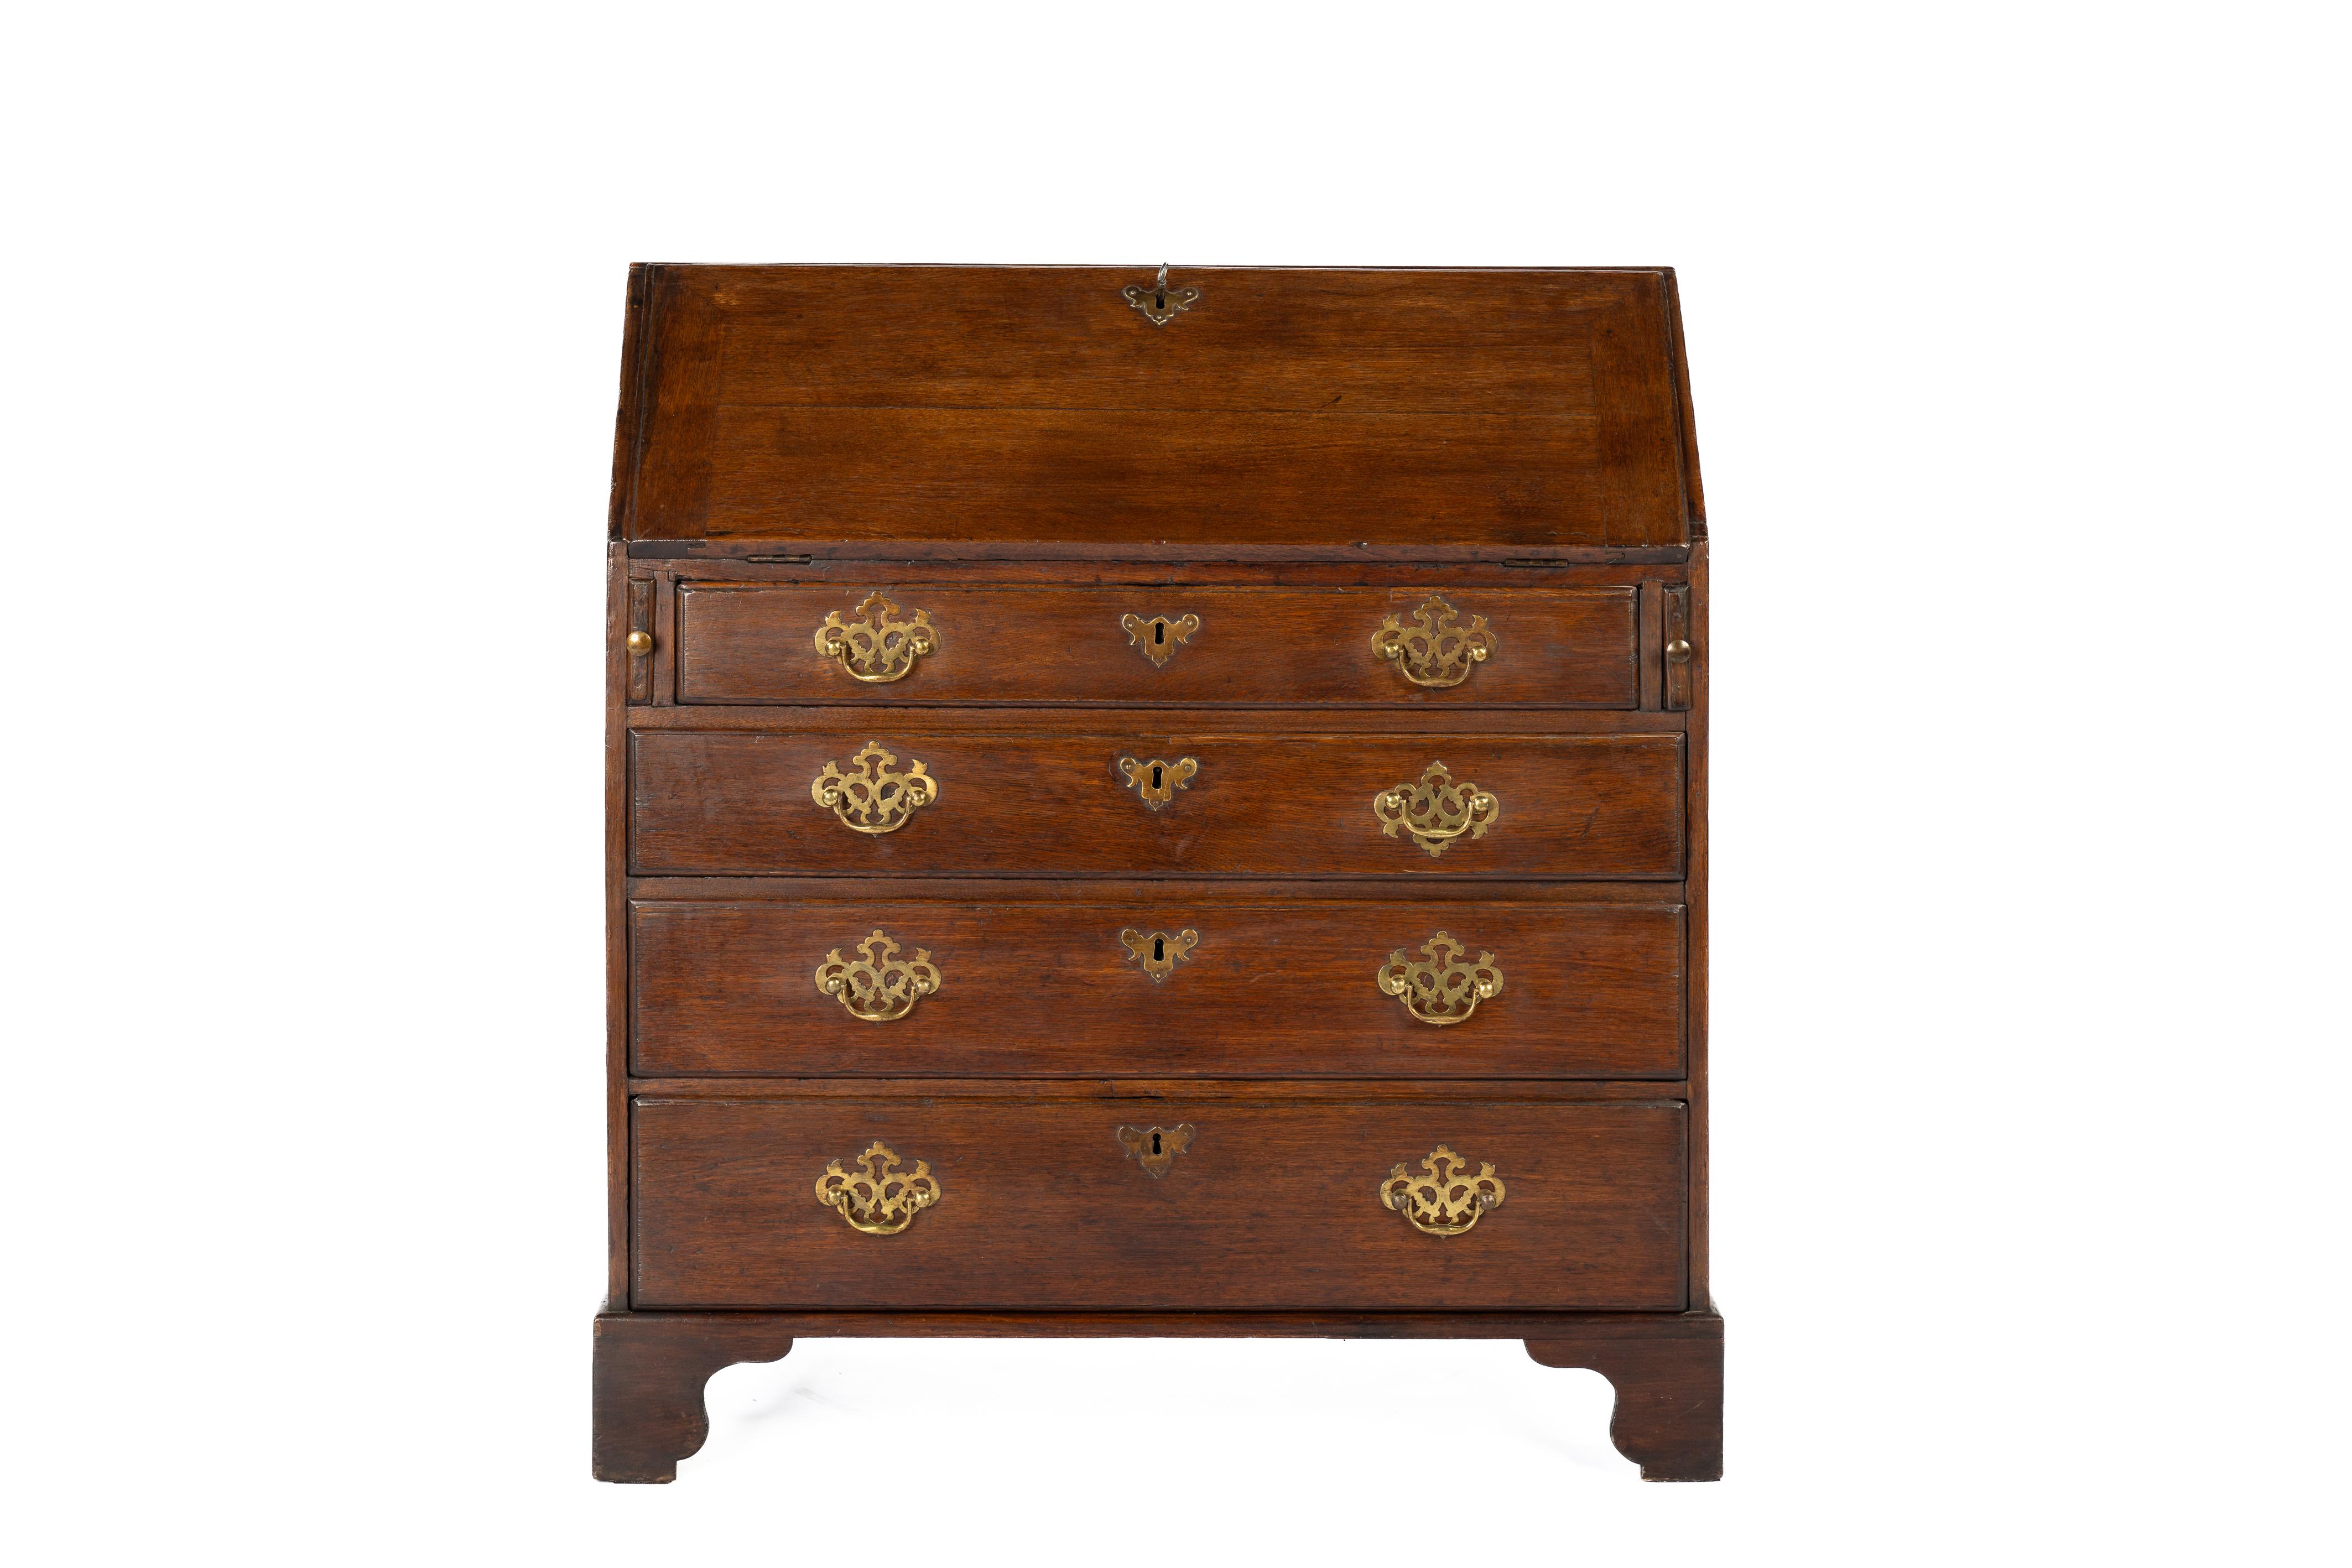 Polished Antique 18th century warm brown English Oak Queen Anne Slant-Front Desk For Sale